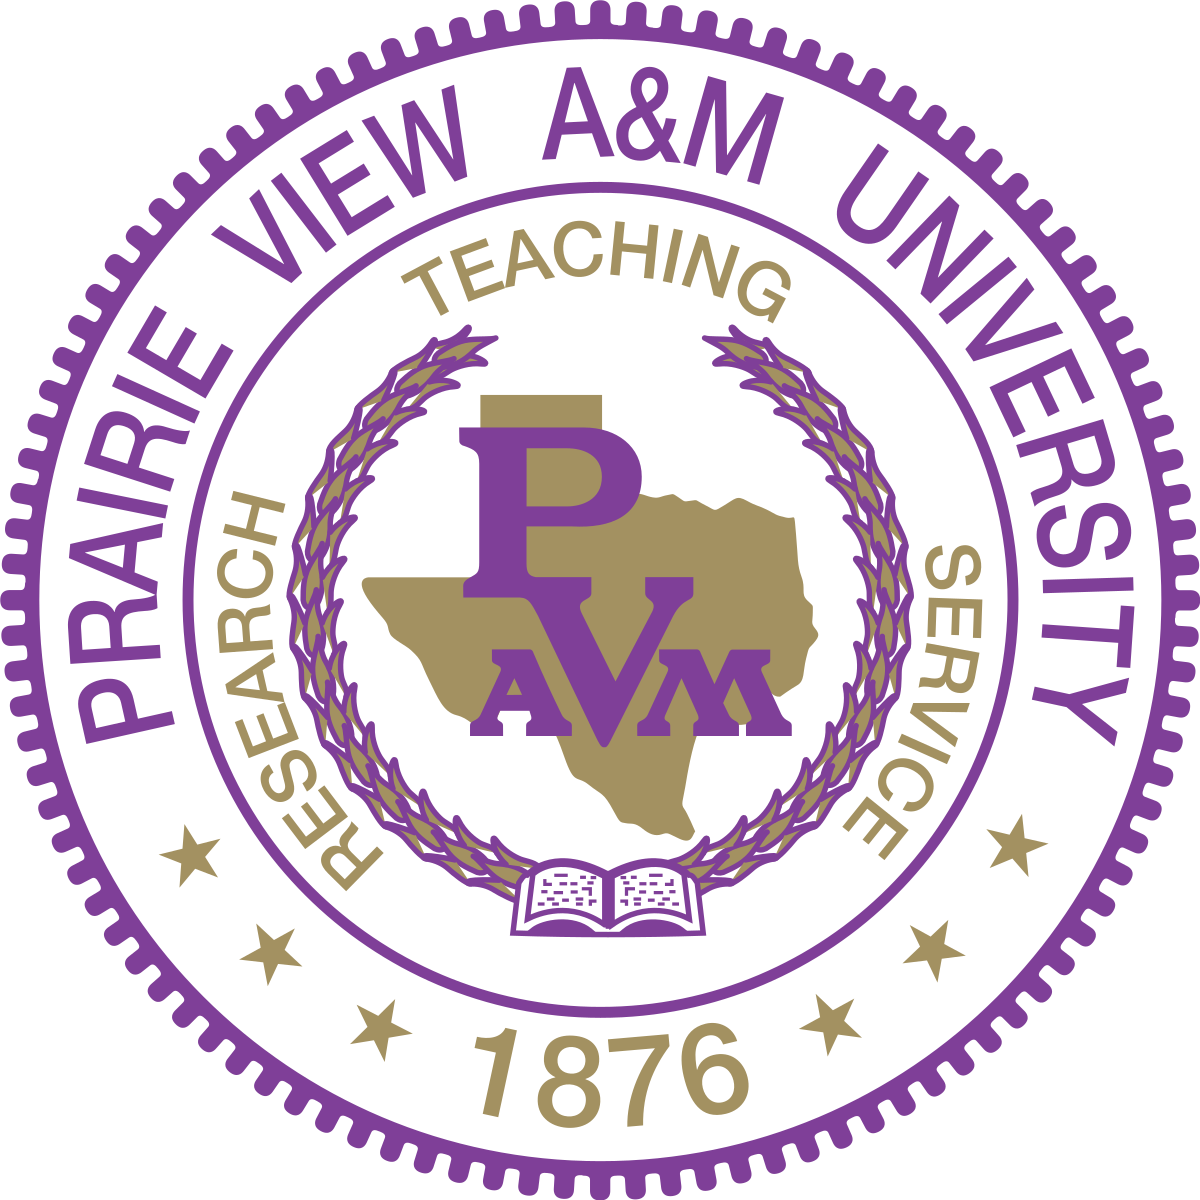 Prairie View A&M University (PV) collegiateluxe